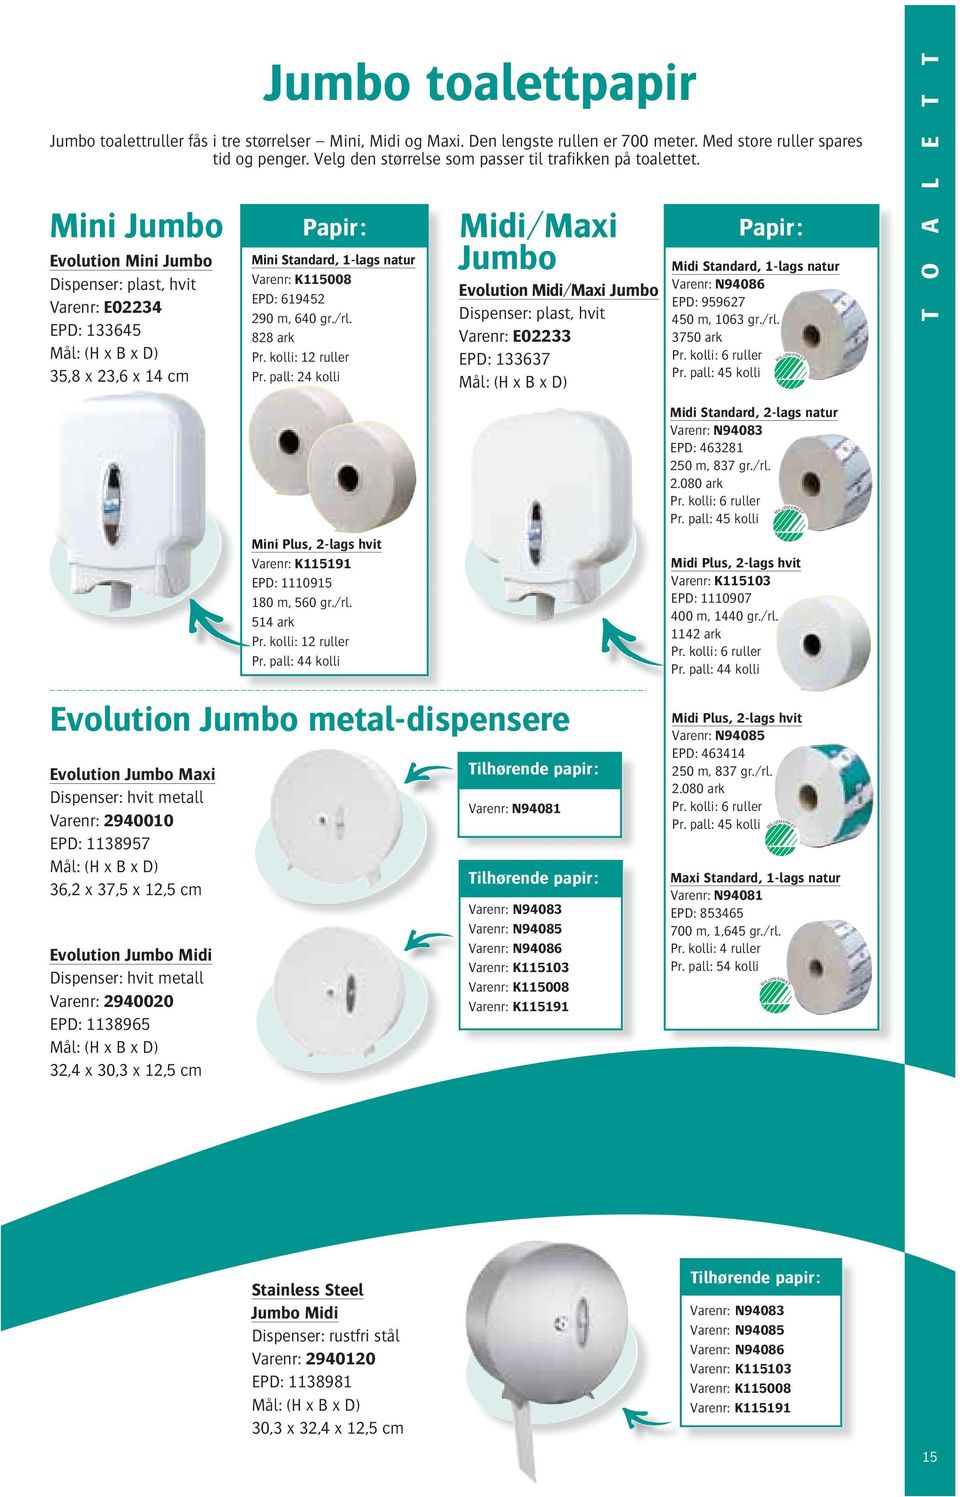 Mini Jumbo Evolution Jumbo Maxi Dispenser: hvit metall Varenr: 2940010 EPD: 1138957 36,2 x 37,5 x 12,5 cm Evolution Jumbo Midi Dispenser: hvit metall Varenr: 2940020 EPD: 1138965 32,4 x 30,3 x 12,5